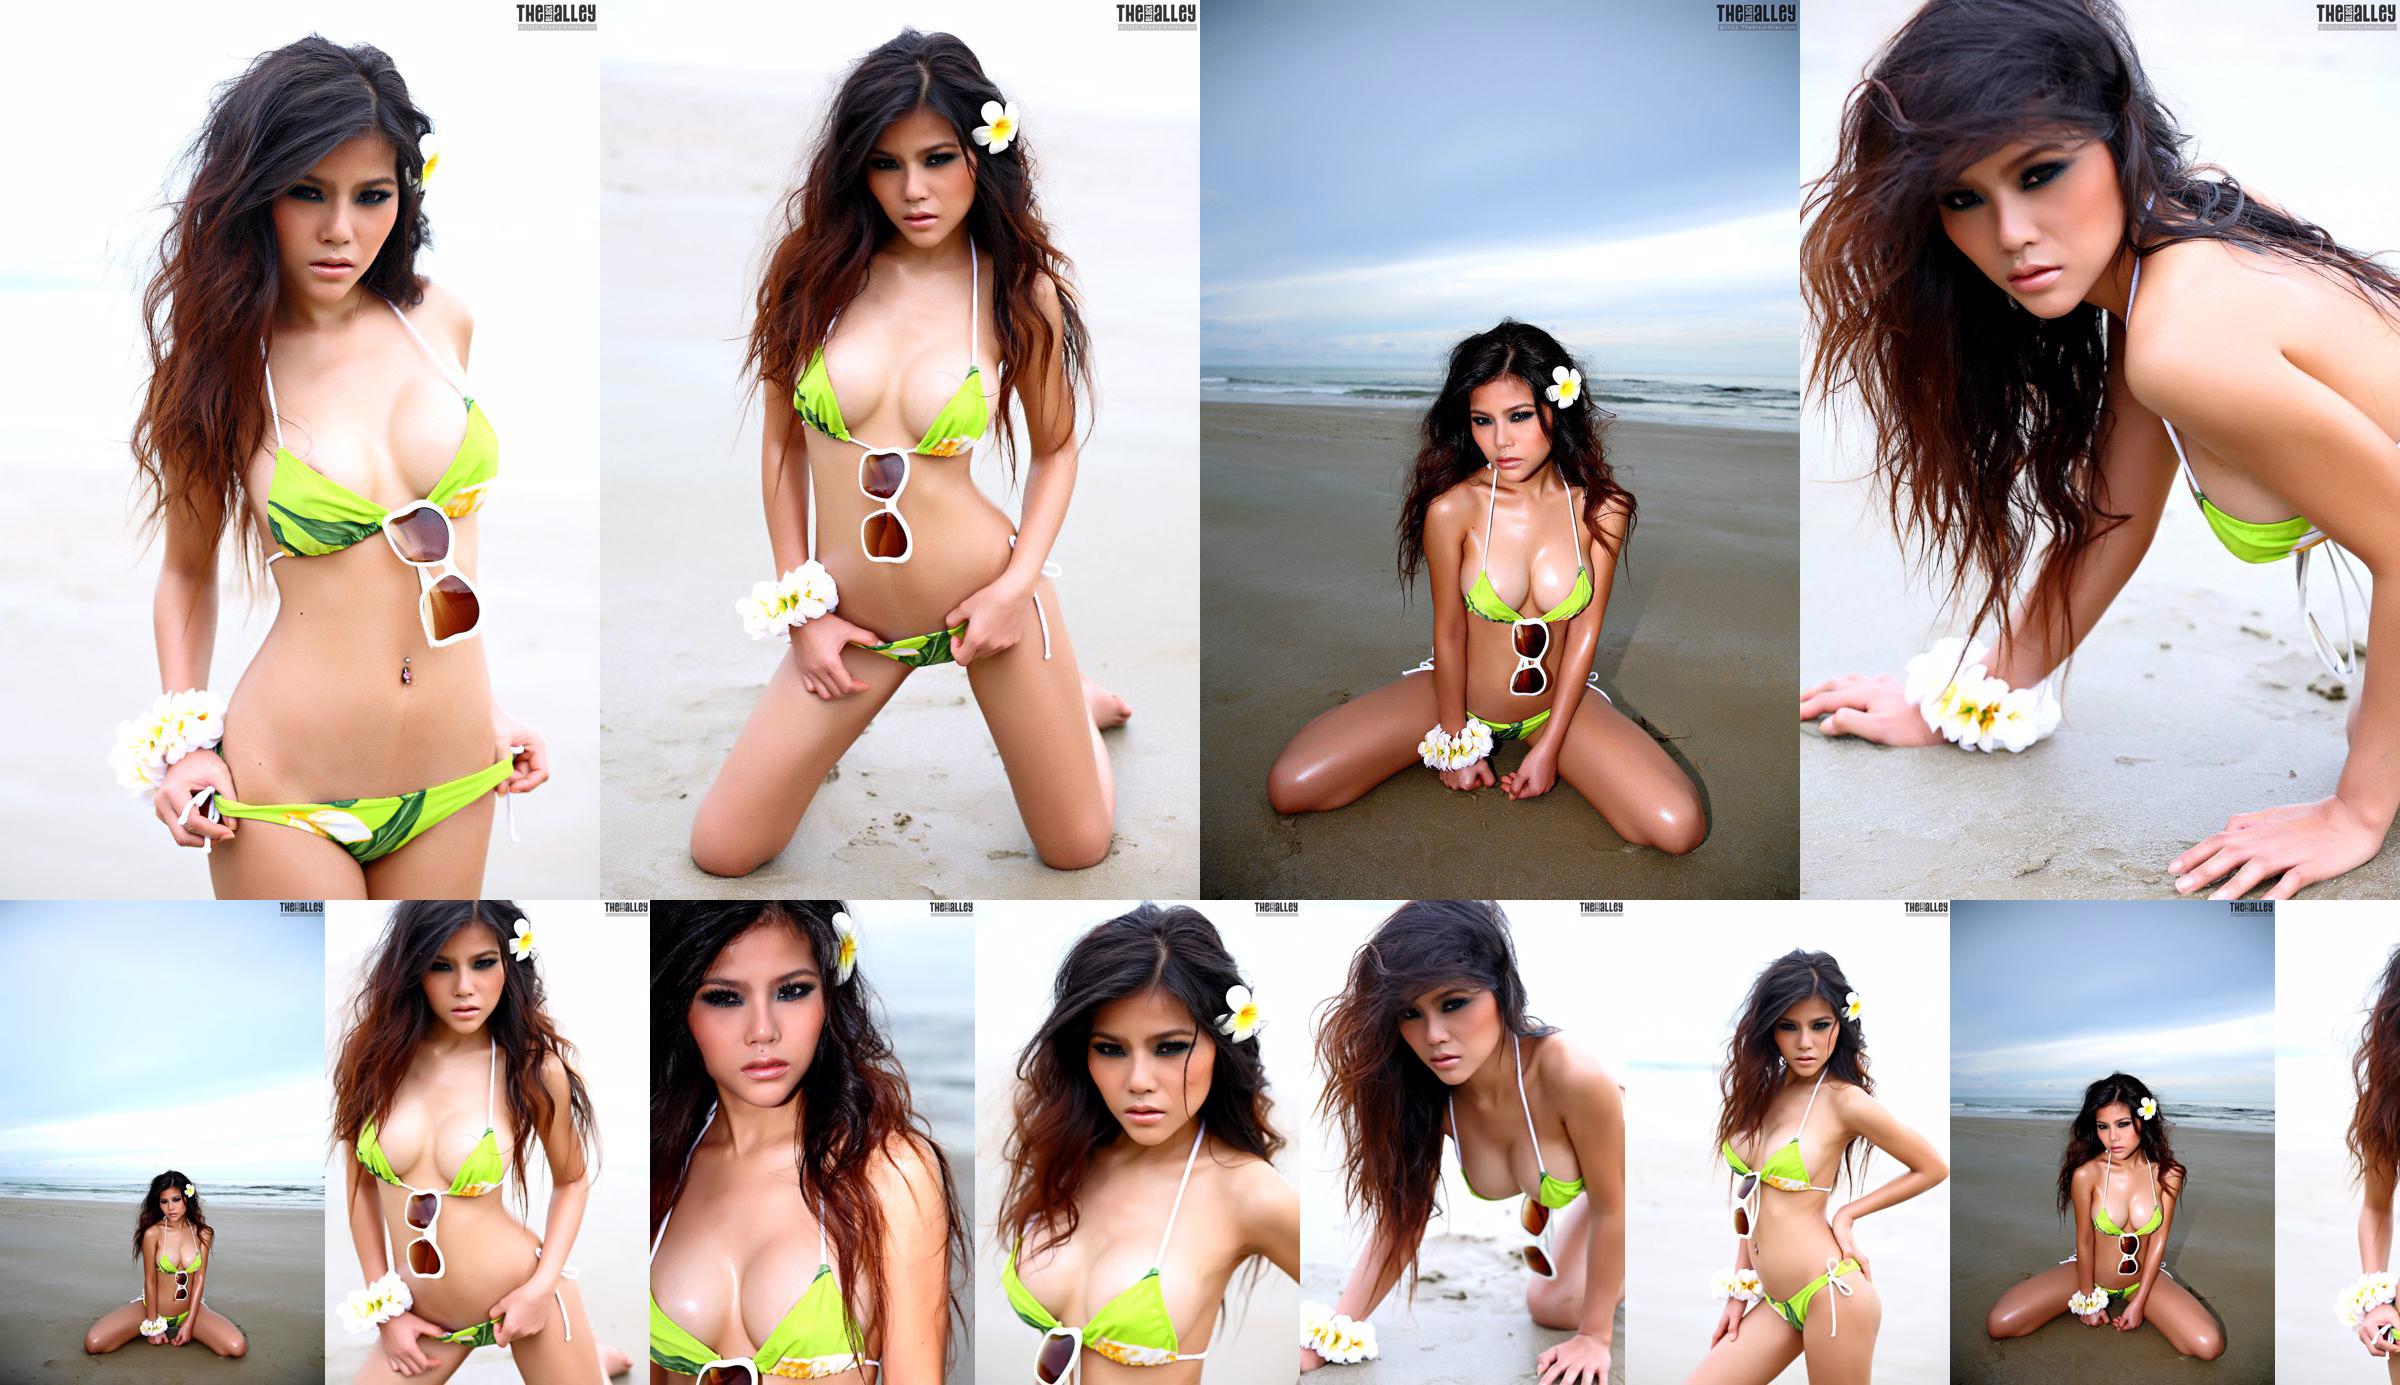 Juliana Young "Body Bikini trên bãi biển" [TBA / Black Lane] No.fcb1f2 Trang 1